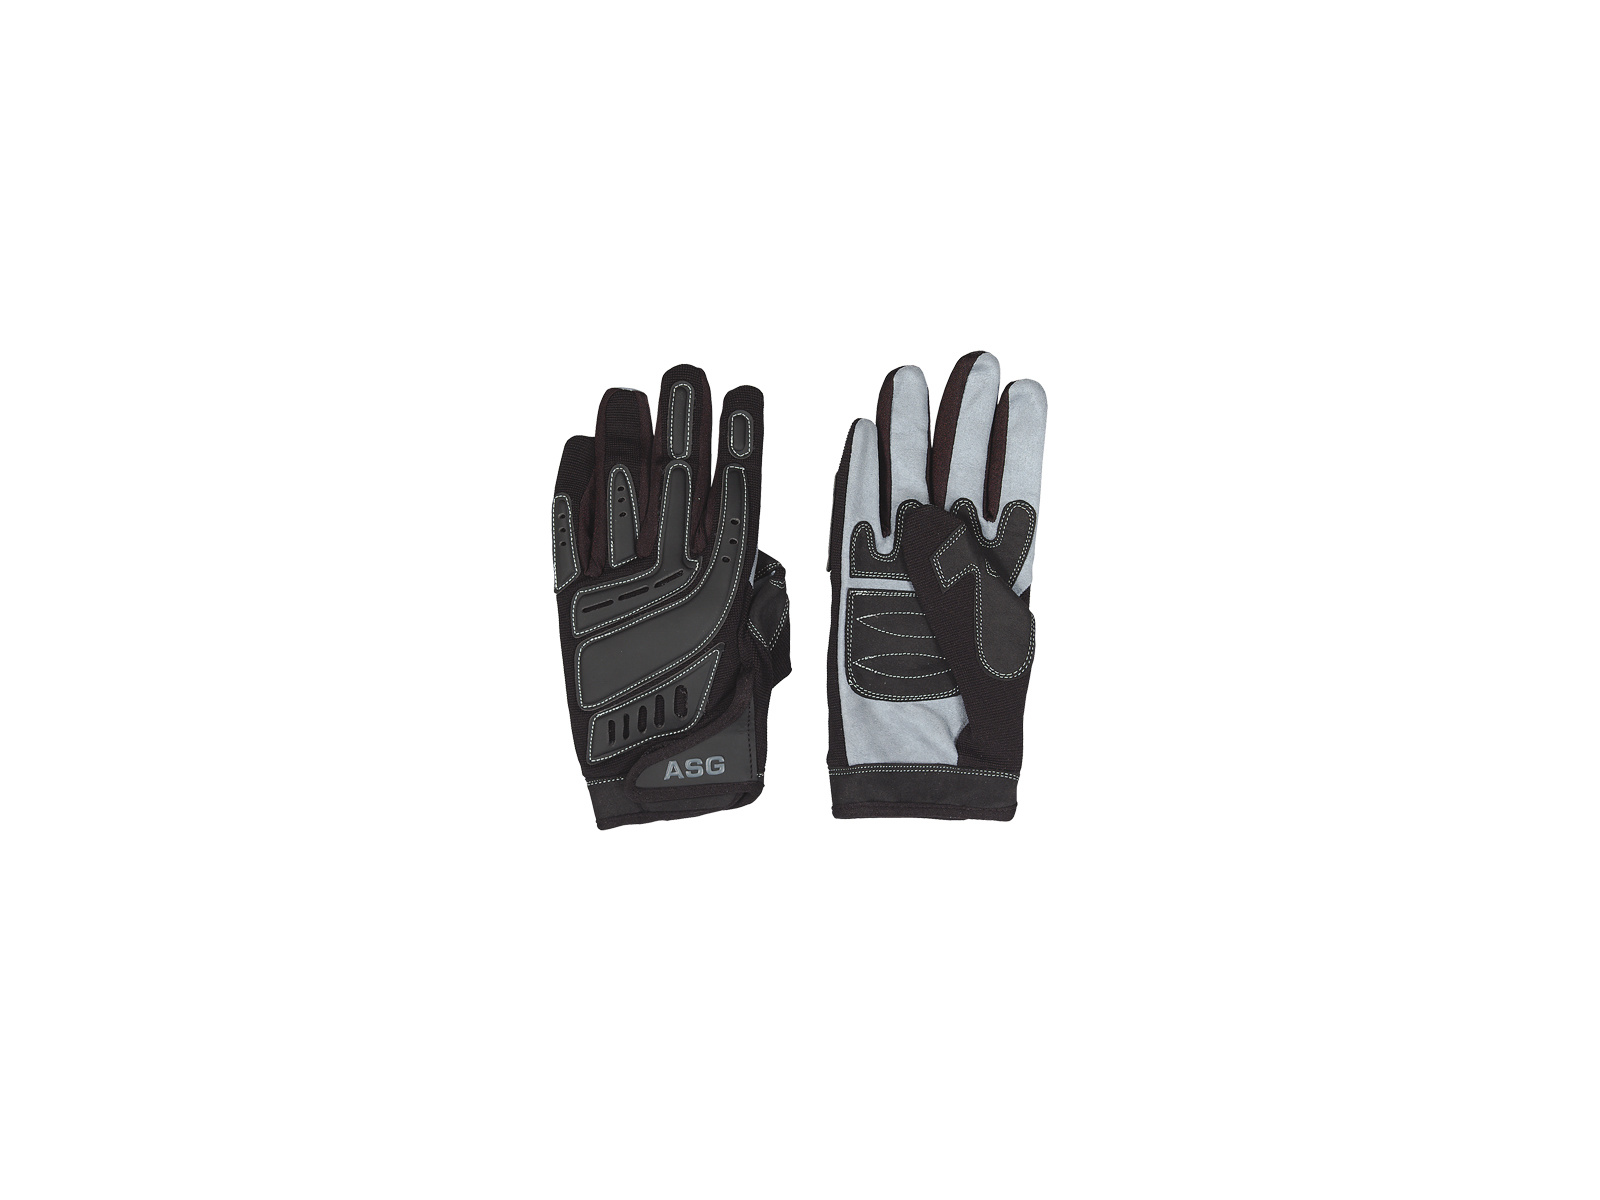 ASG Sports glove - BK/Gray